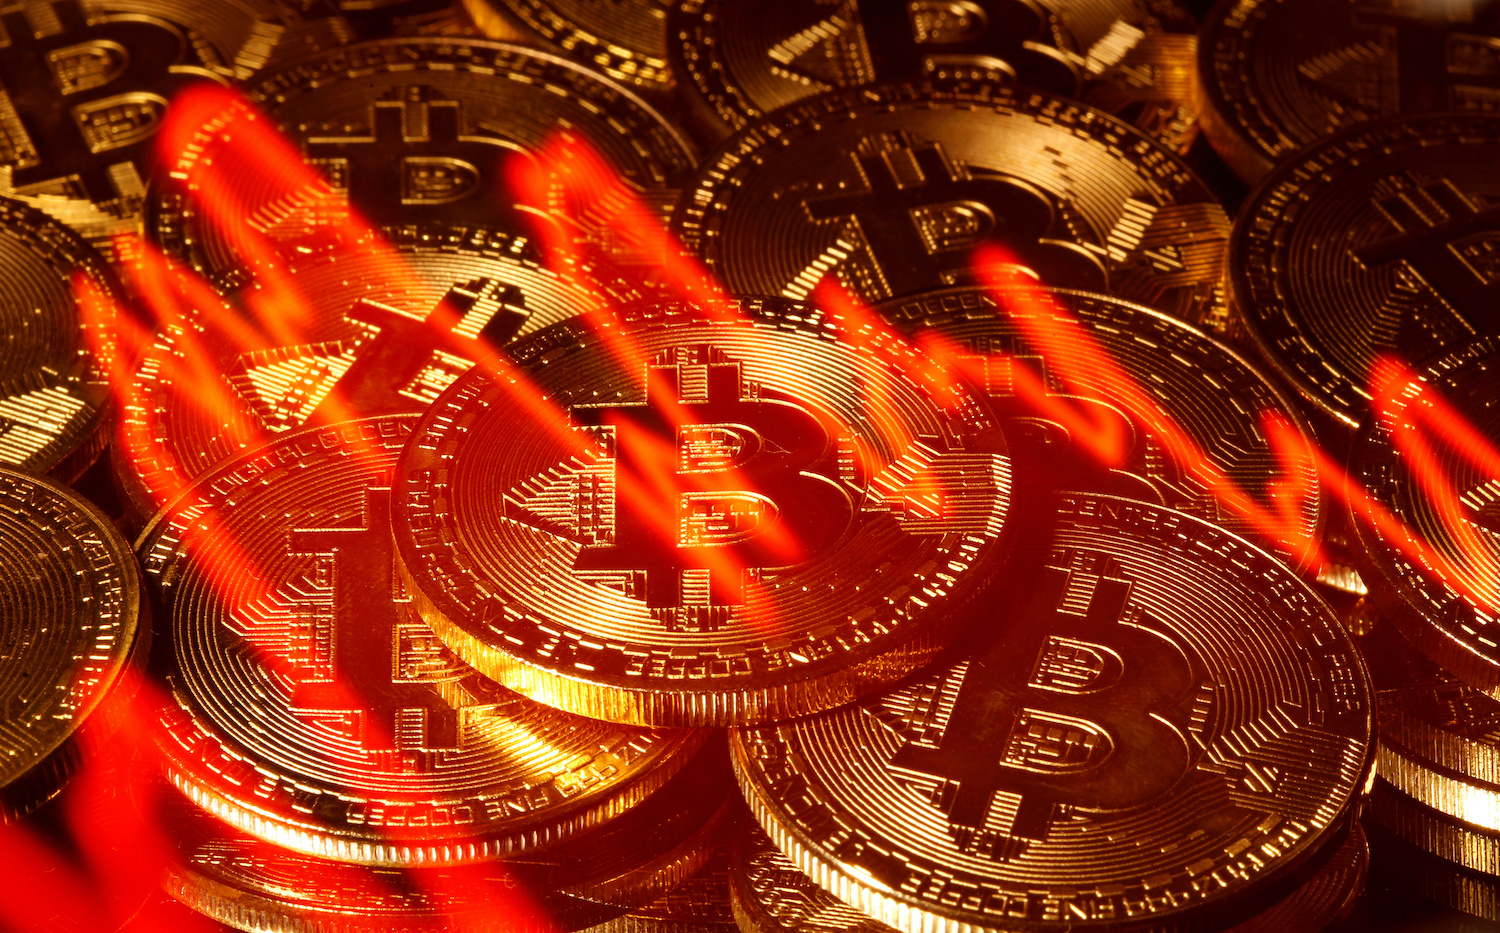 ‘The longer the Bitcoin bubble lasts, the harder it will burst’